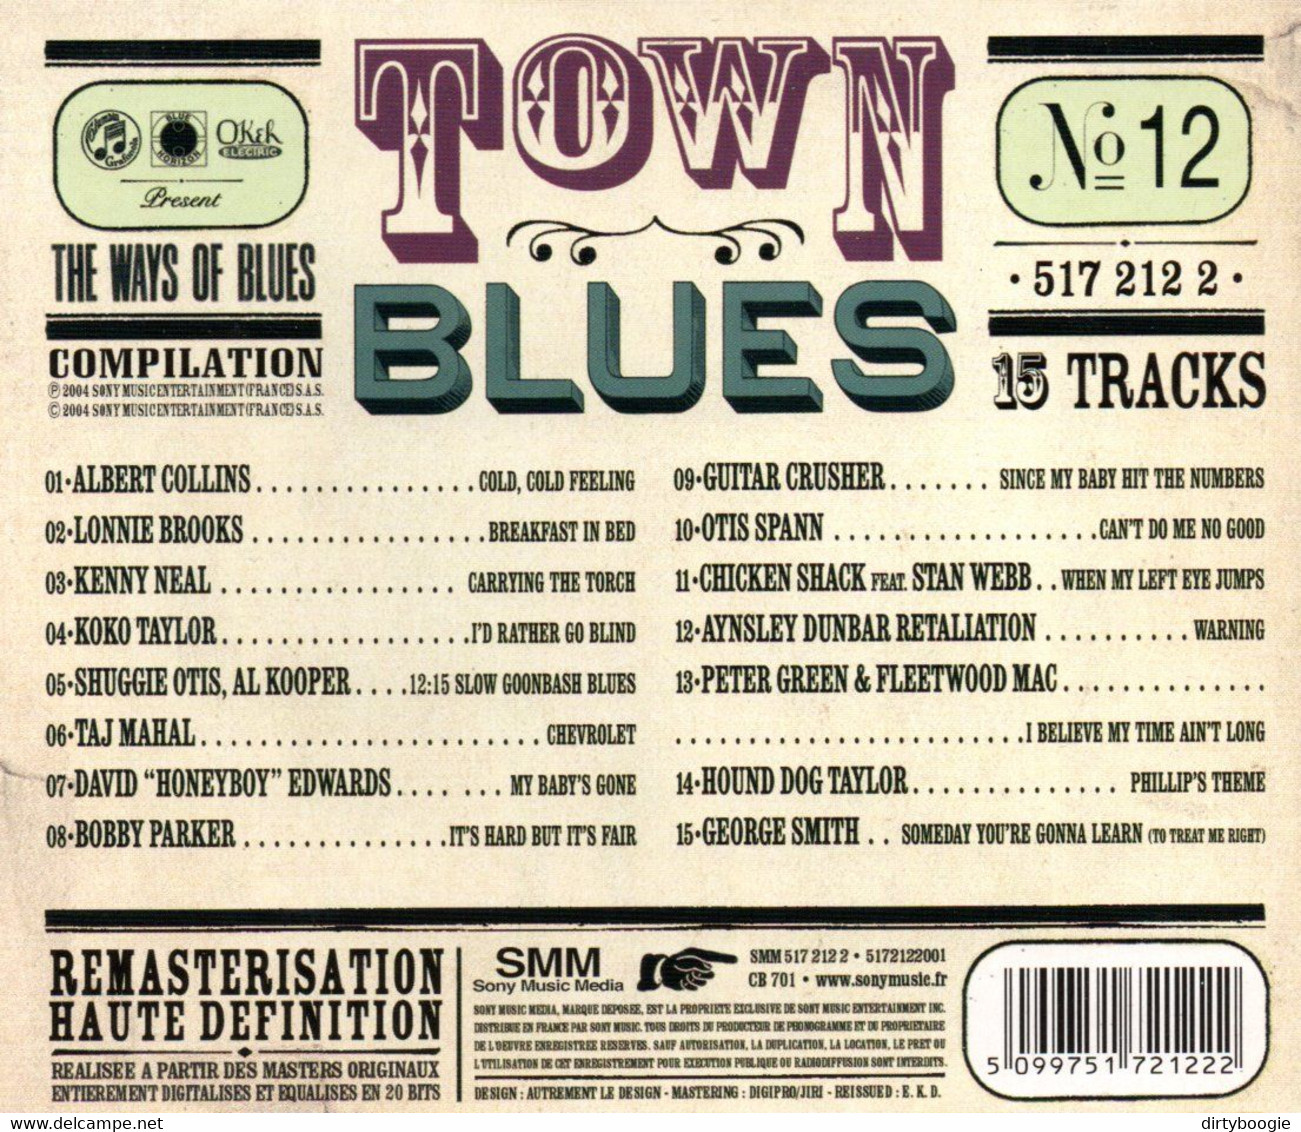 TOWN BLUES - CD - Blues